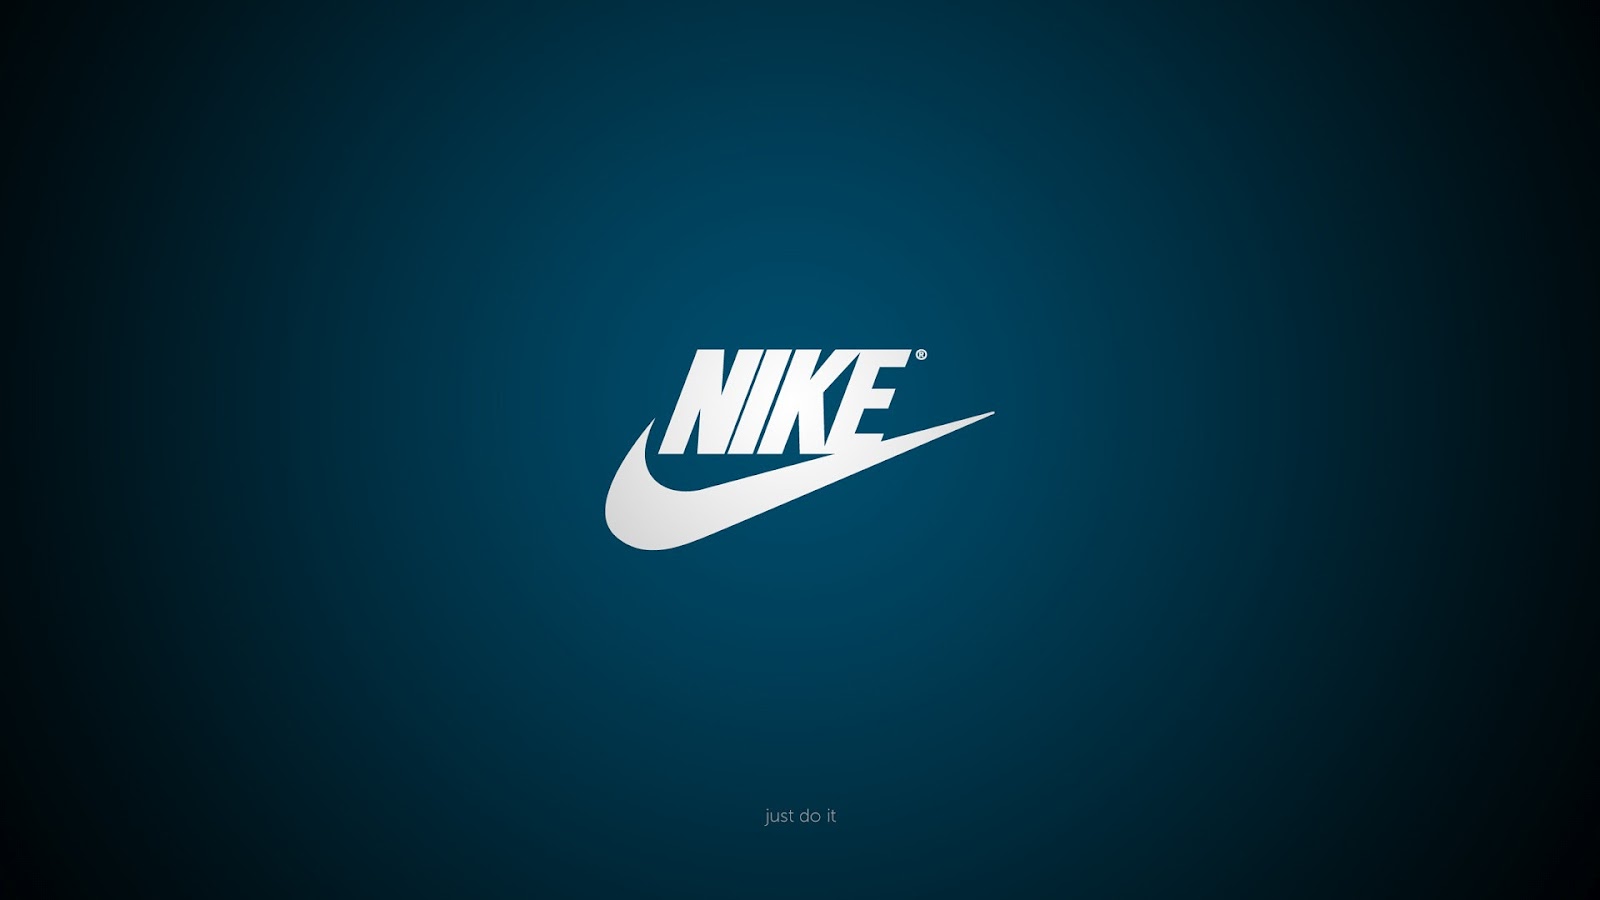 http://1.bp.blogspot.com/-SsojSog7IUU/UAAZUcOQsjI/AAAAAAAACpw/fYwQTJeW7hg/s1600/Nike_Sport_Brand_Logo_Minimalist_HD_Wallpaper-Vvallpaper.Net.jpg